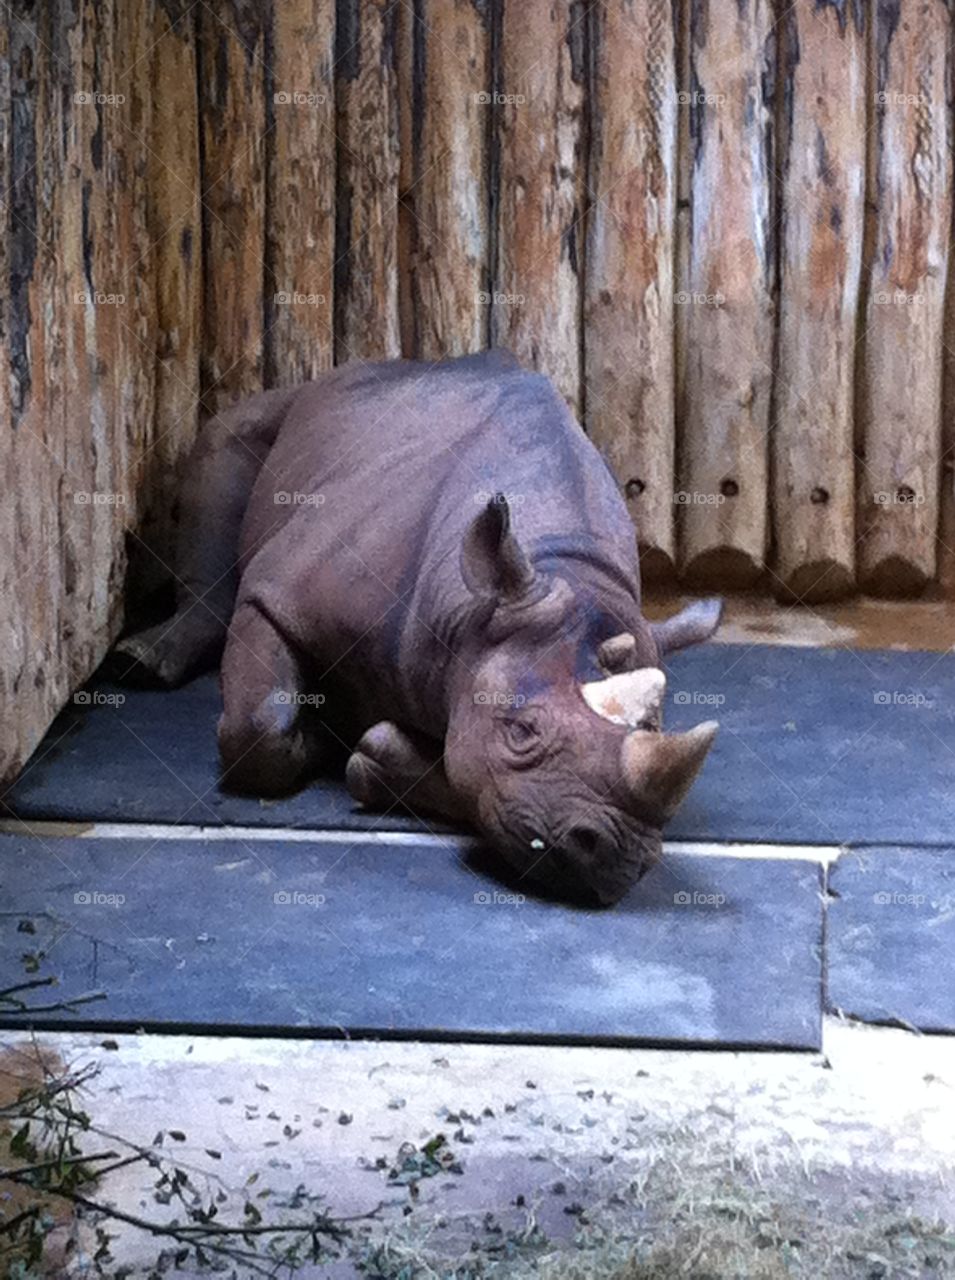 Black Rhino sleeping. A black rhino resting at a Devon Zoo